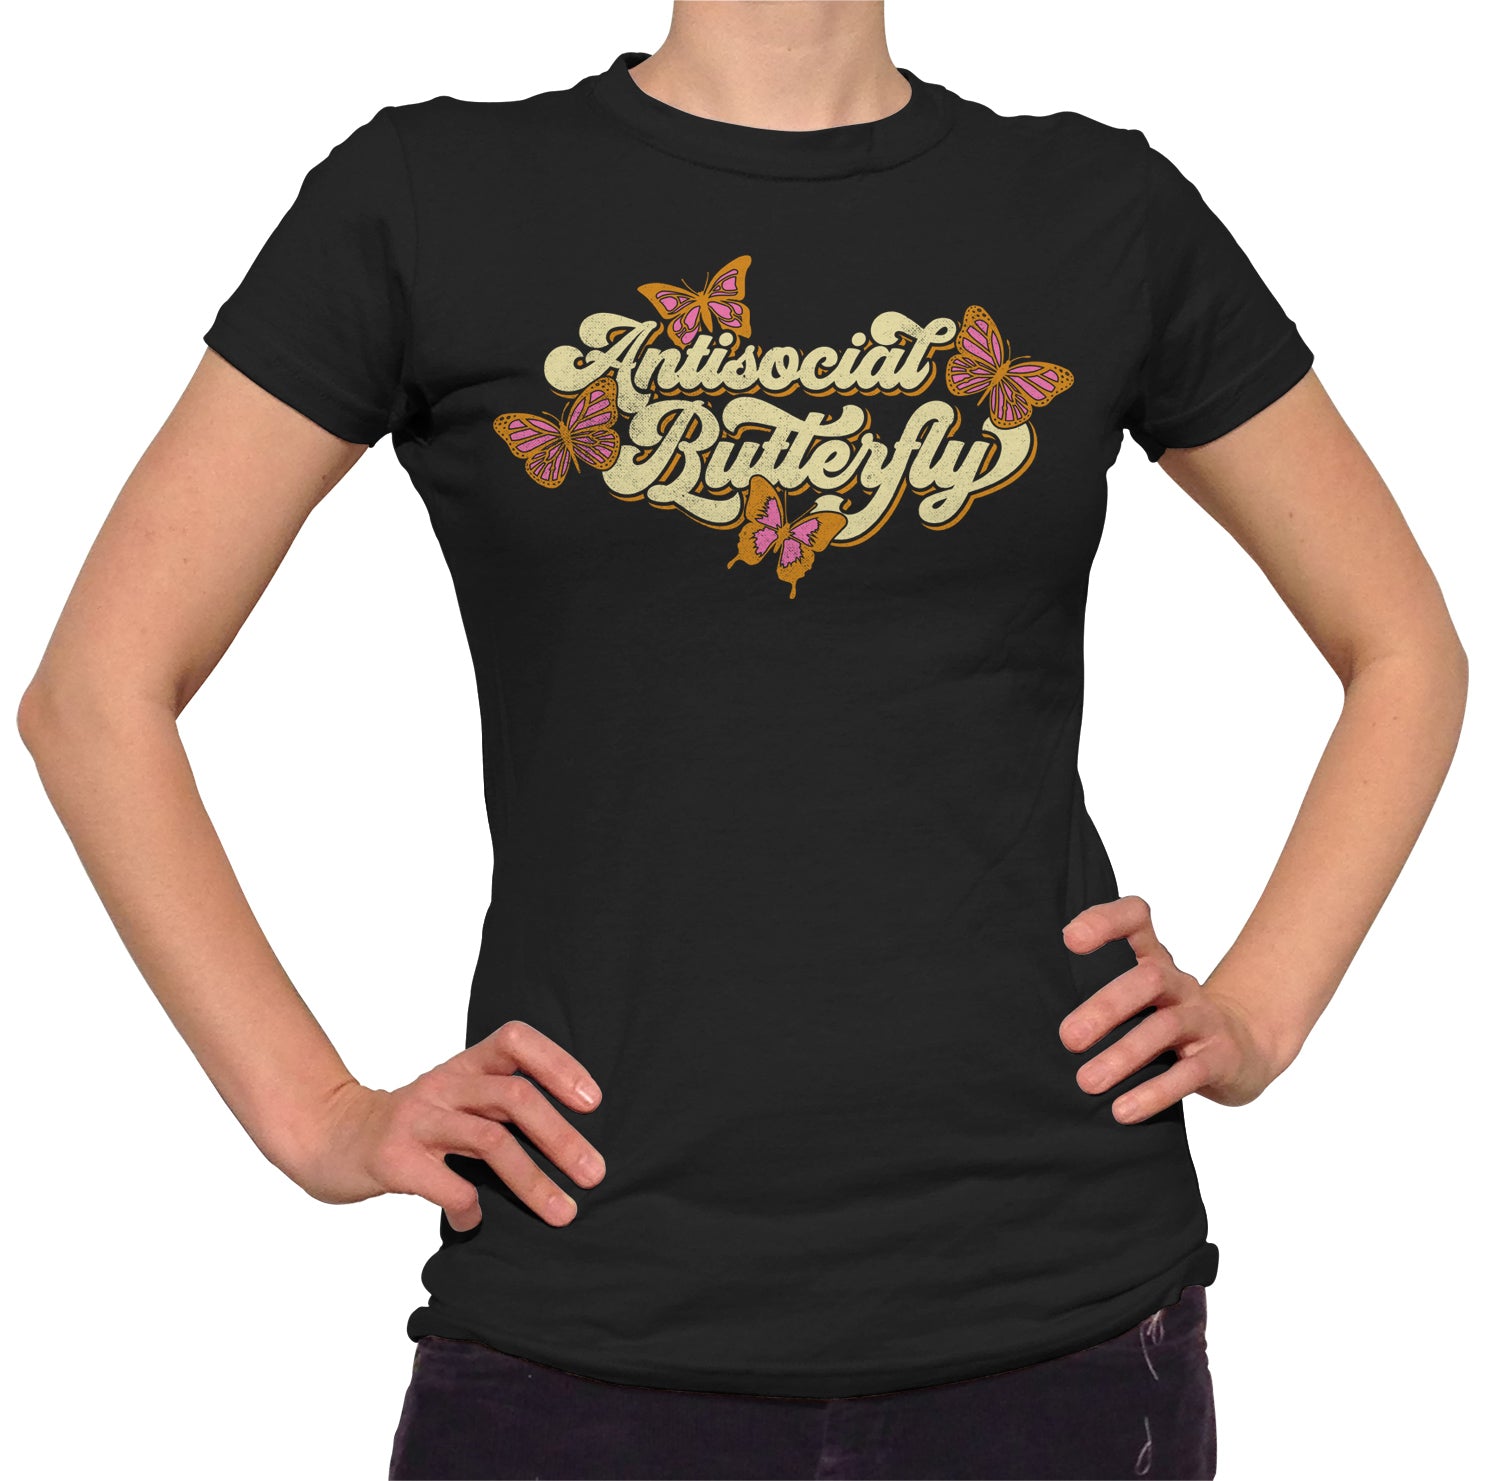 Women's Antisocial Butterfly T-Shirt